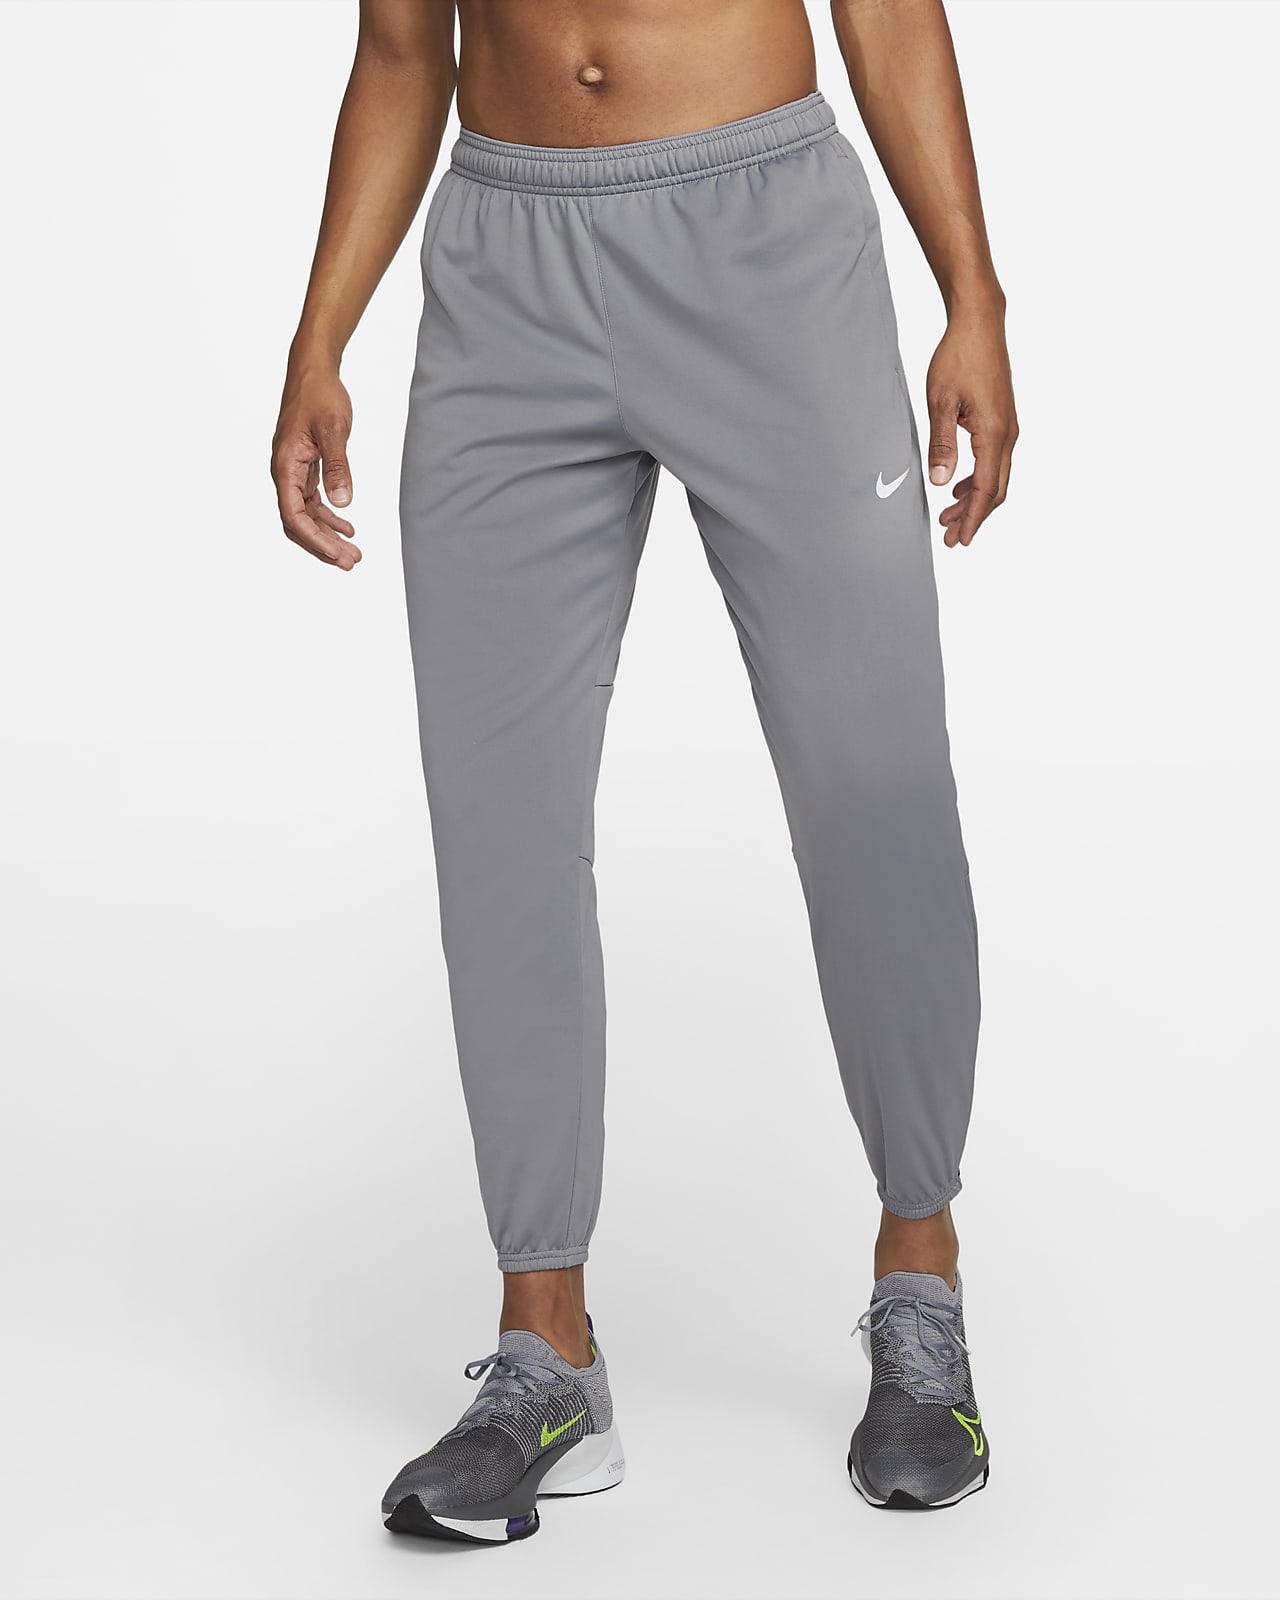 Desanimarse detalles Dibuja una imagen Nike Therma-FIT Repel Challenger Pantalón de running - Hombre. Nike ES